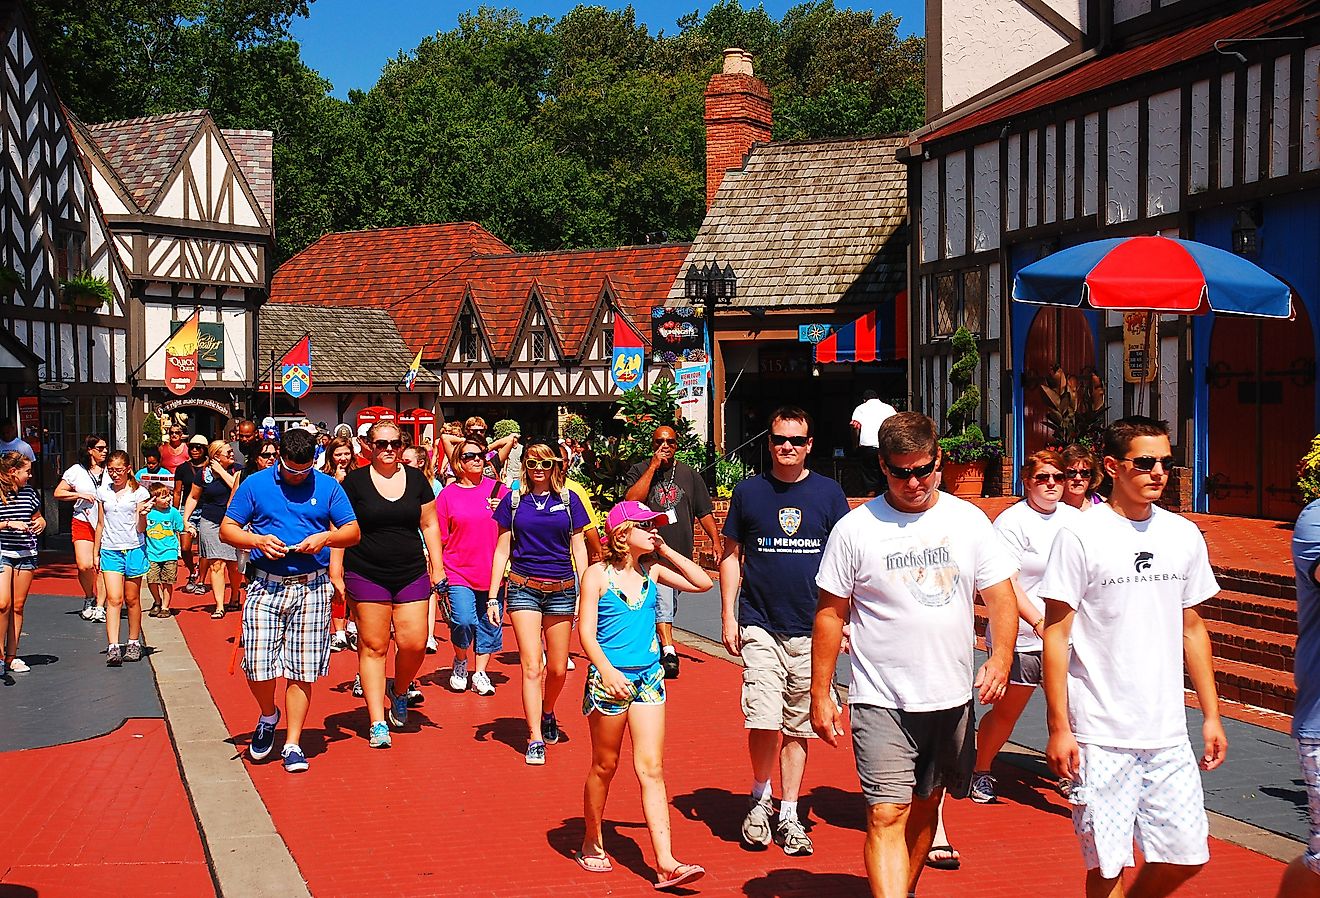 A crowd of people make their way through a recreated Tudor Village in Busch Gardens, in Williamsburg, Virginia. Image credit James Kirkikis via Shutterstock